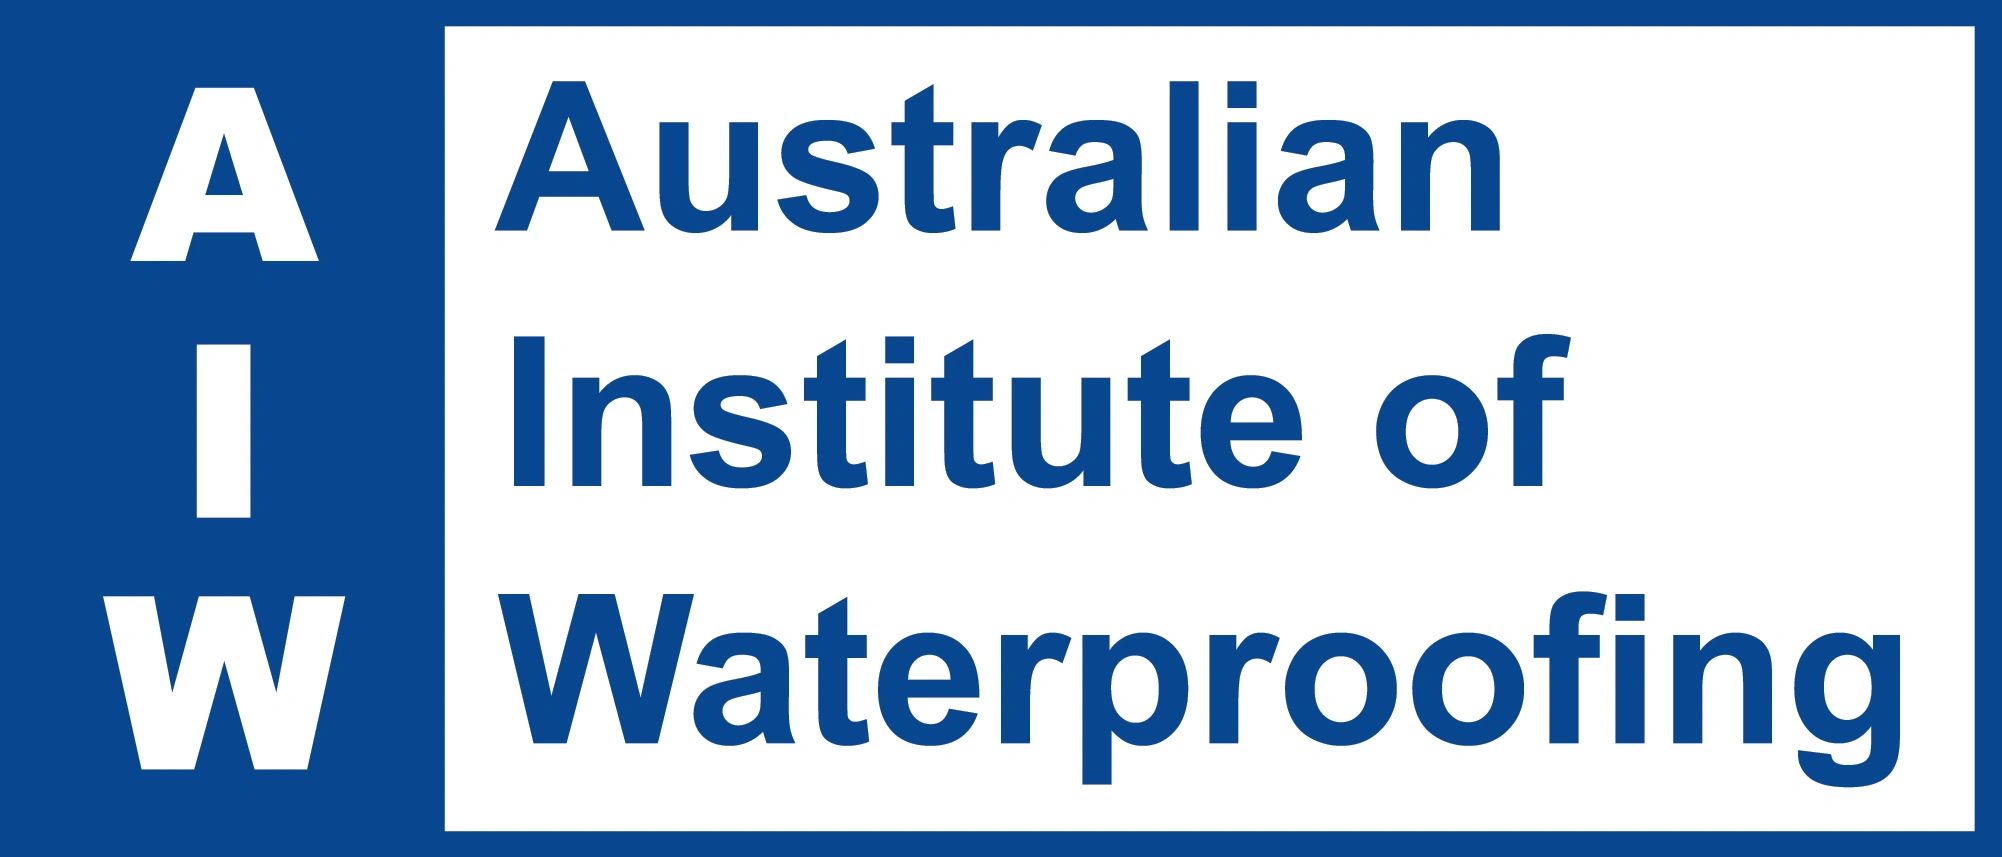 Australian Institute of Waterproofing
www.waterpoof.org.au